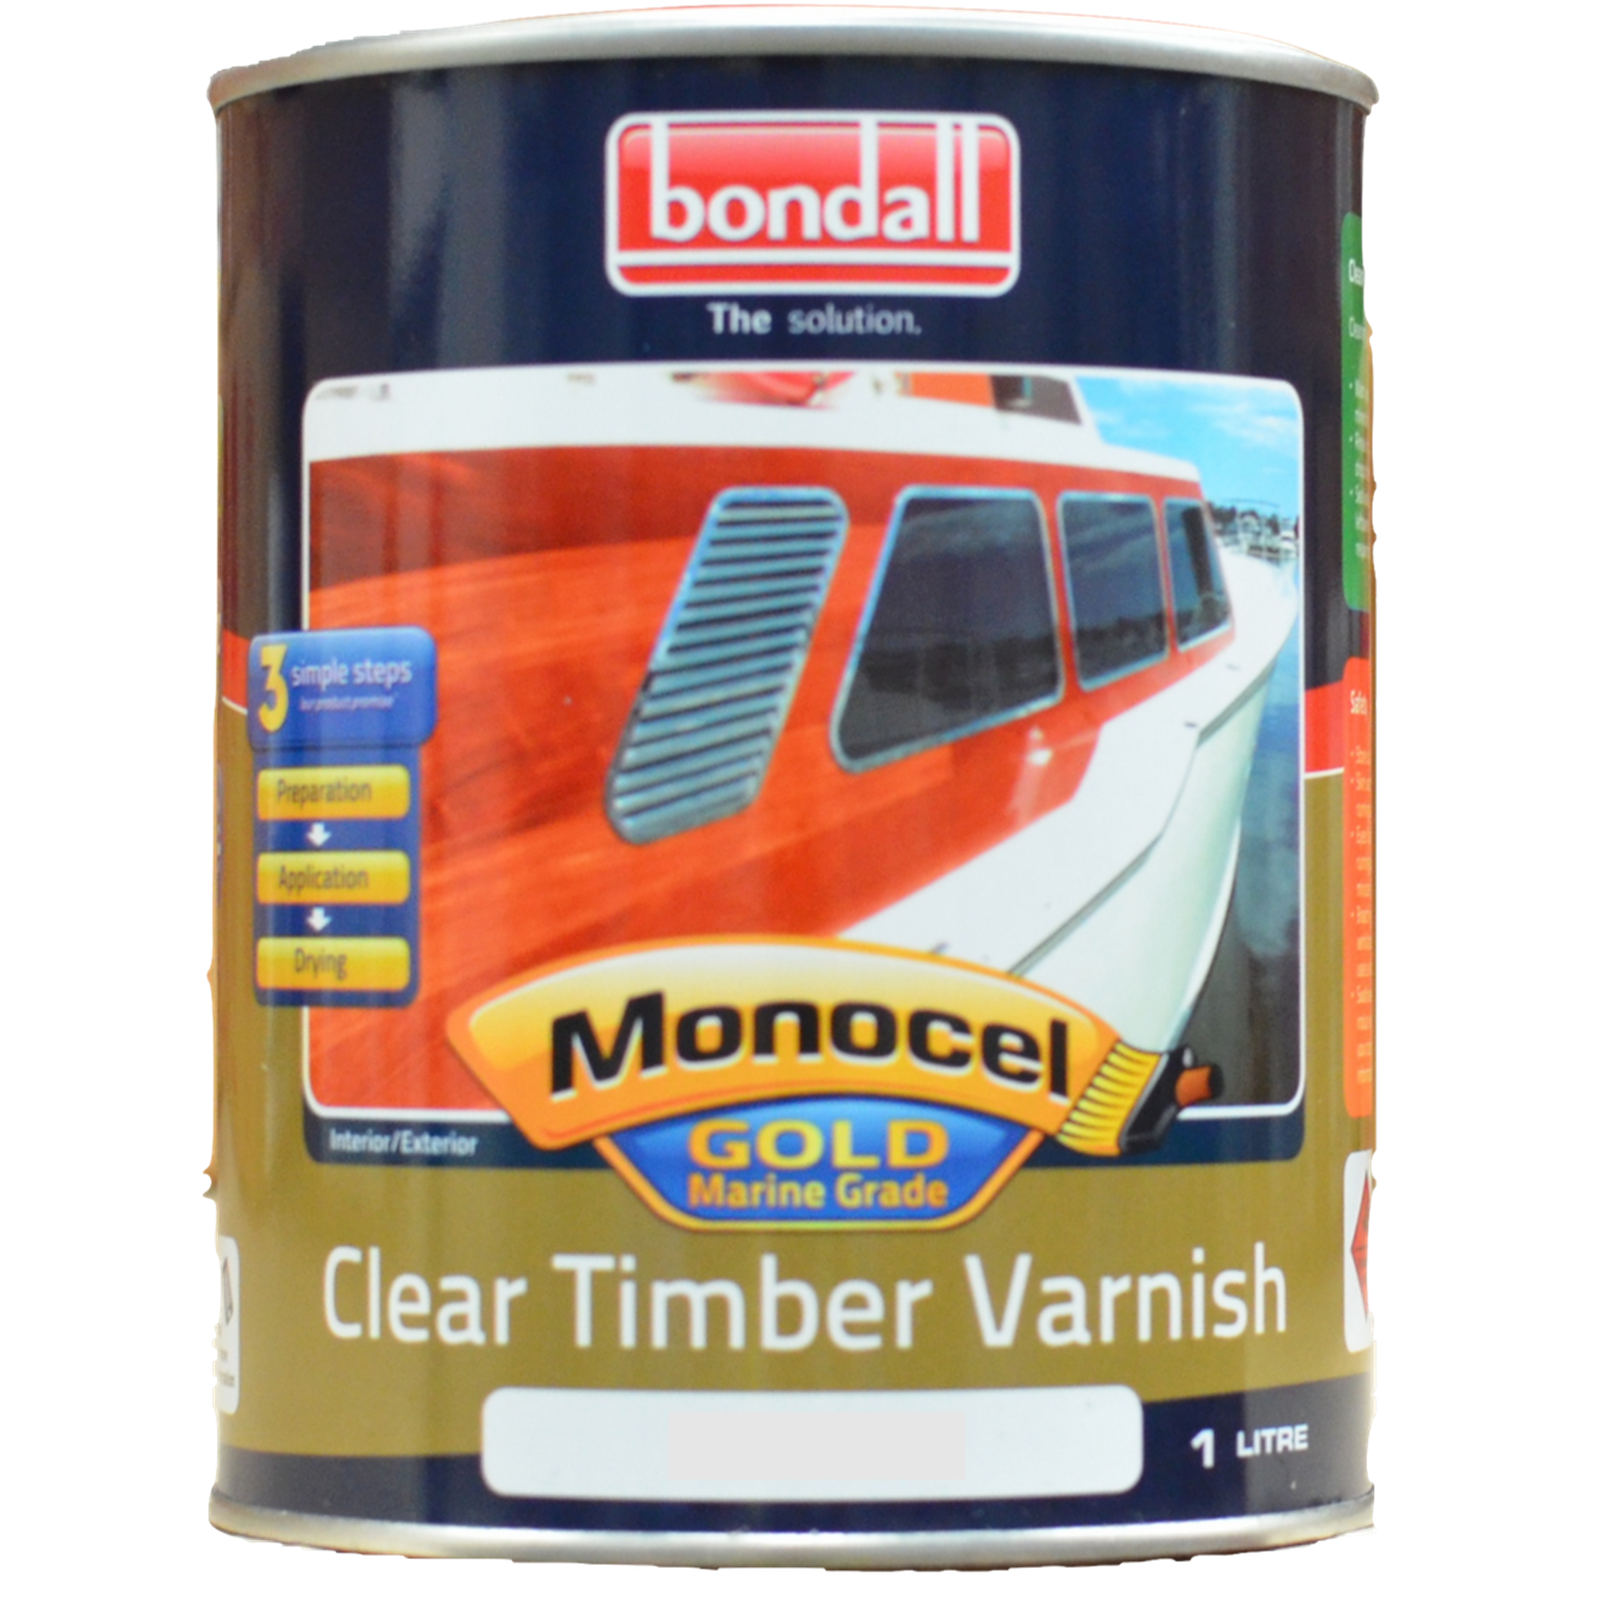 Bondall 1L Satin Monocel Gold Marine Clear Timber Varnish